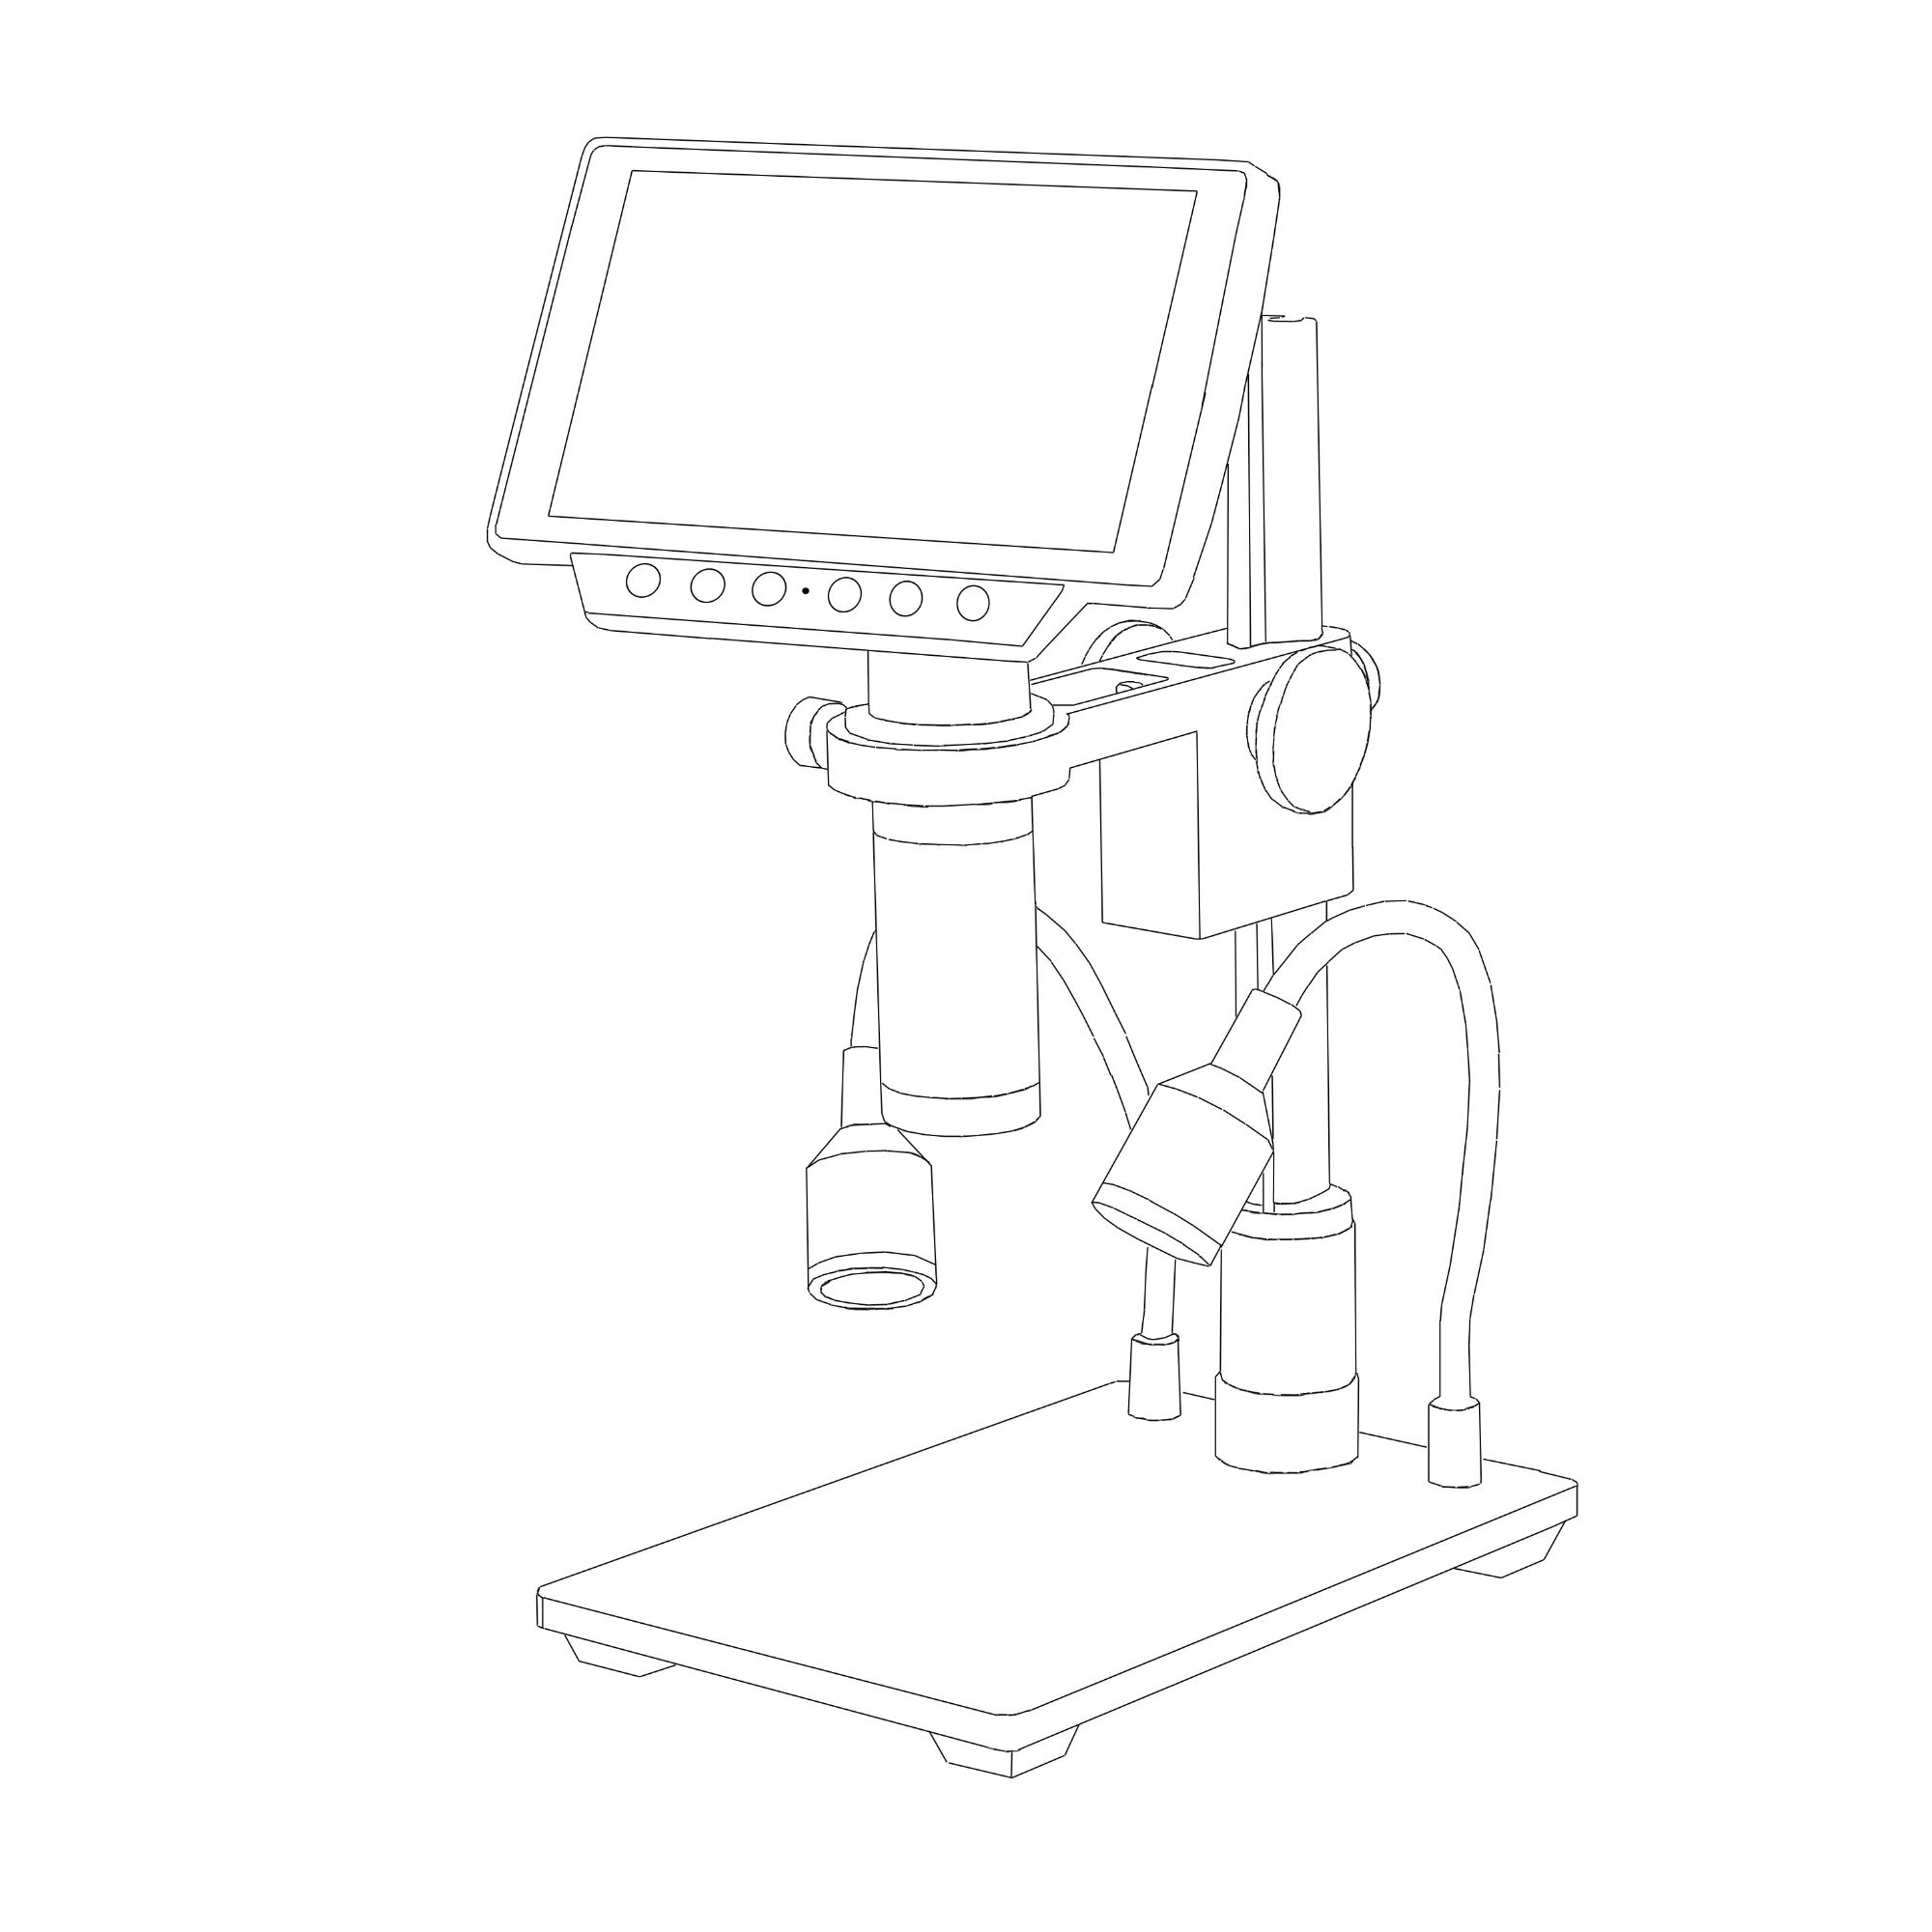 HY-1070 Microscope Camera user manual